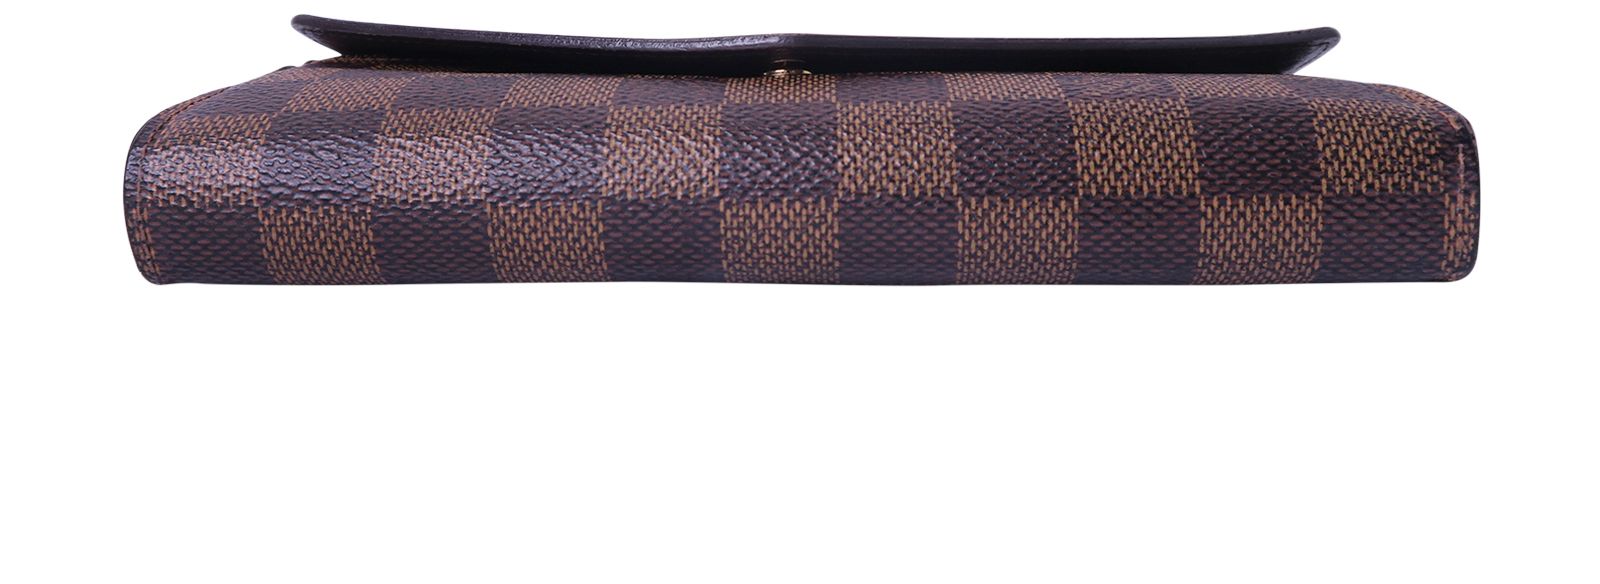 Louis Vuitton Sarah Small leather goods 254185